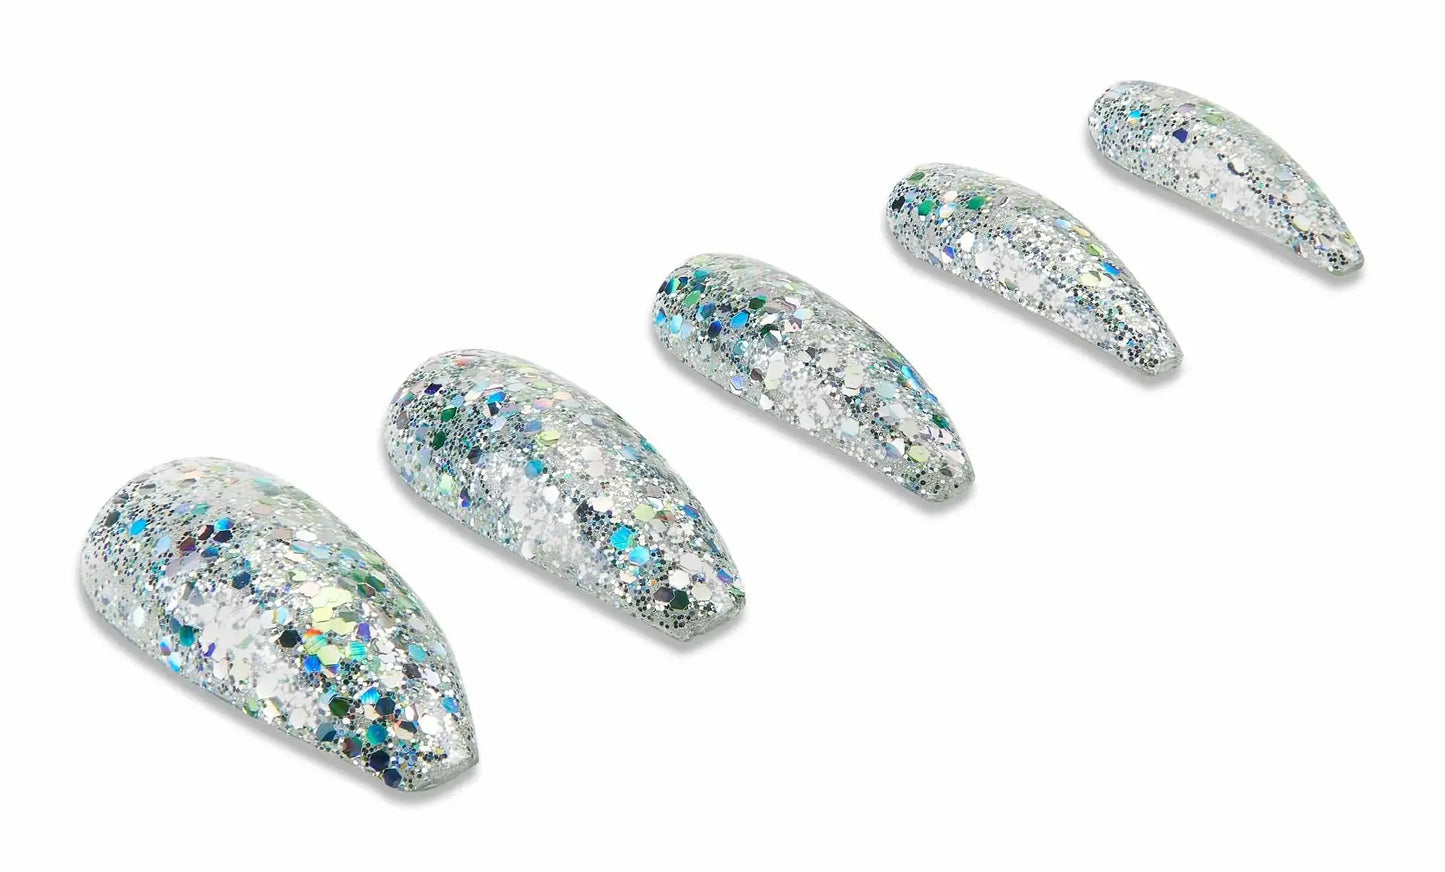 Ardell Nail Addict Premium Nails Blue Jewelled Glitter